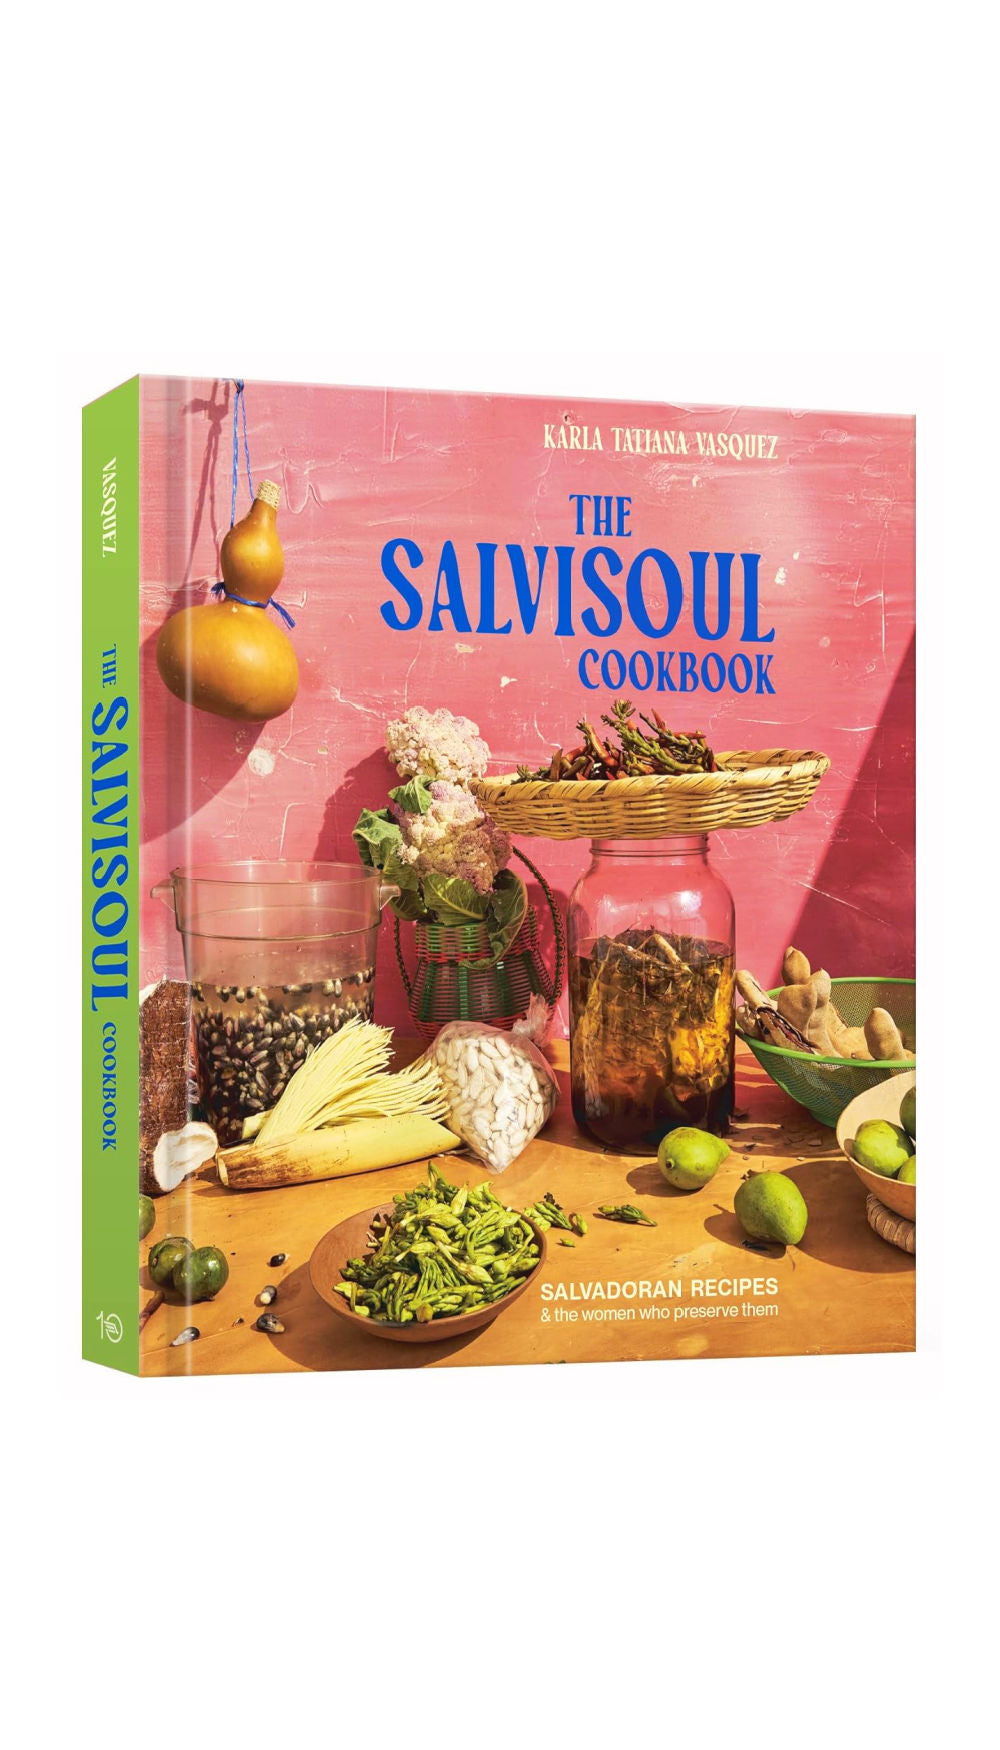 The Salvisoul Cookbook: Salvadoran Recipes & The Women Who Preserve Them